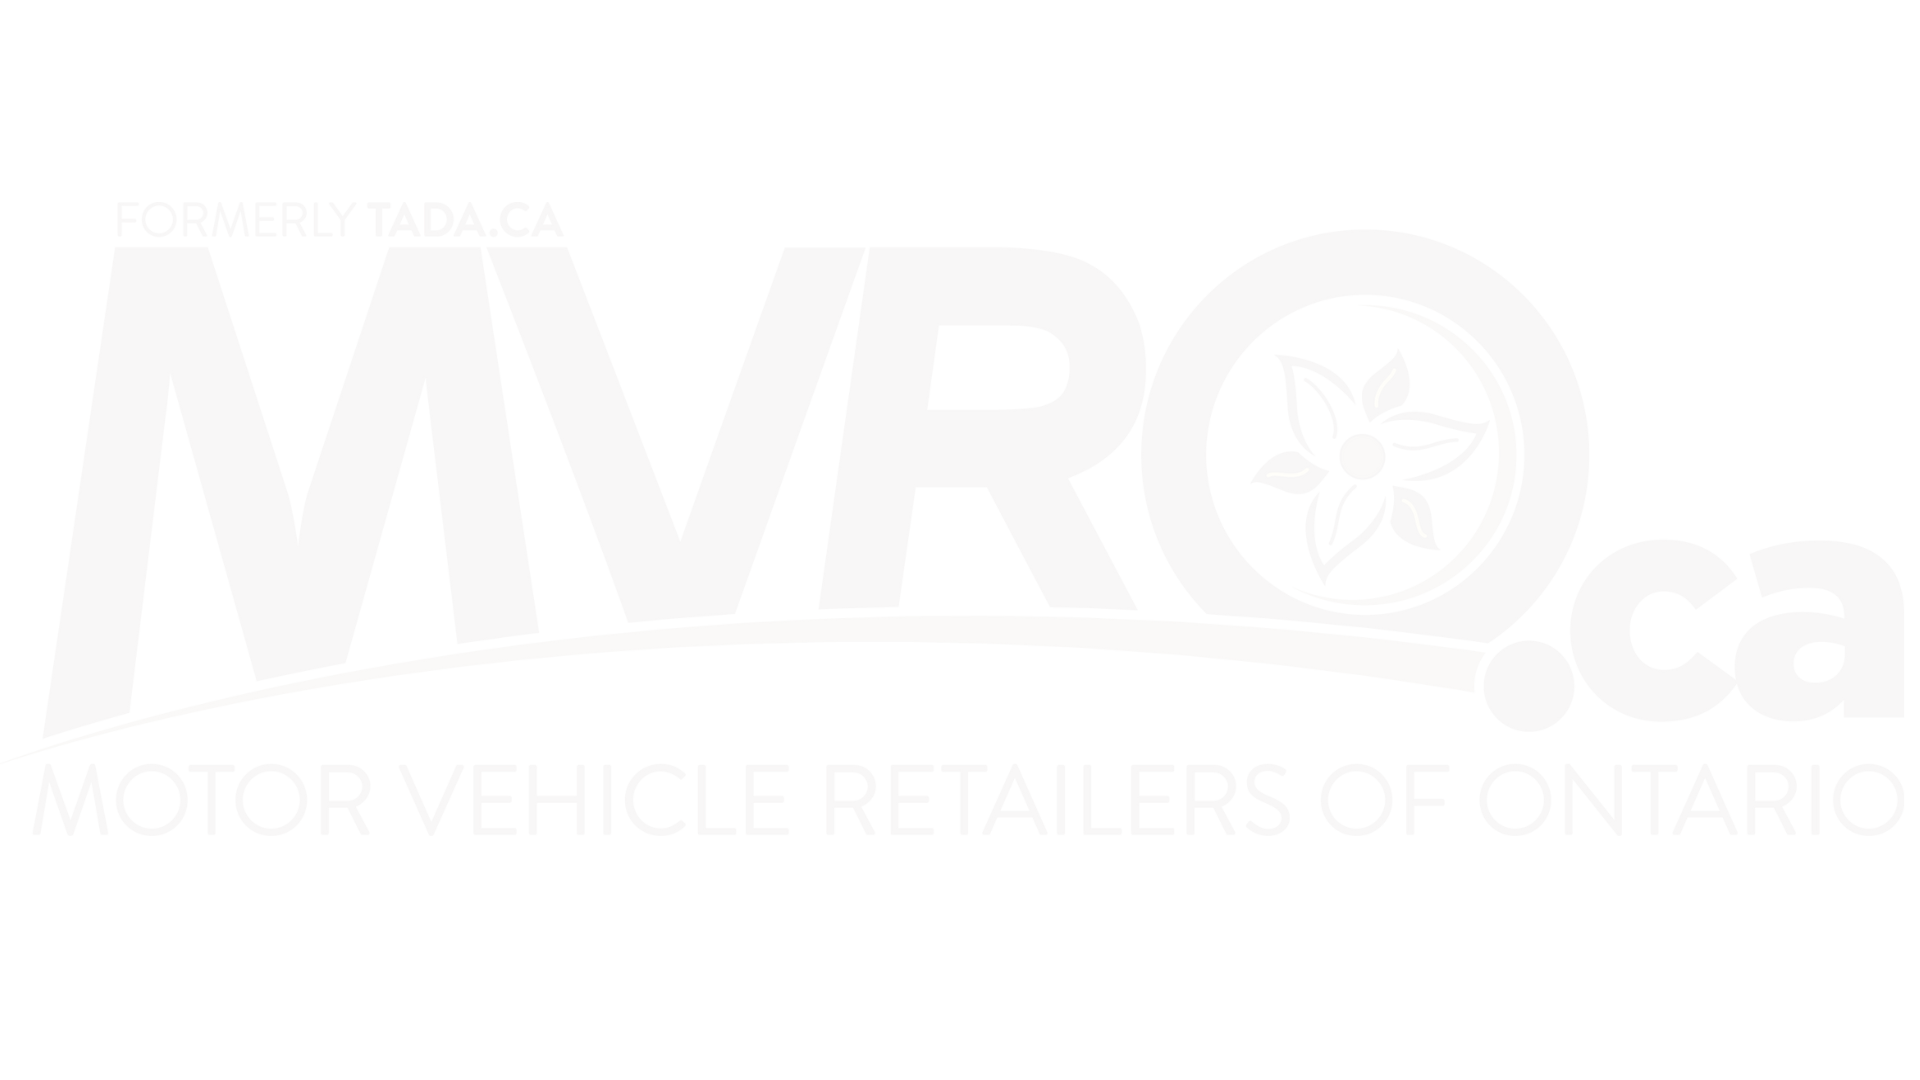 Motor Vehicle Retailers of Ontario